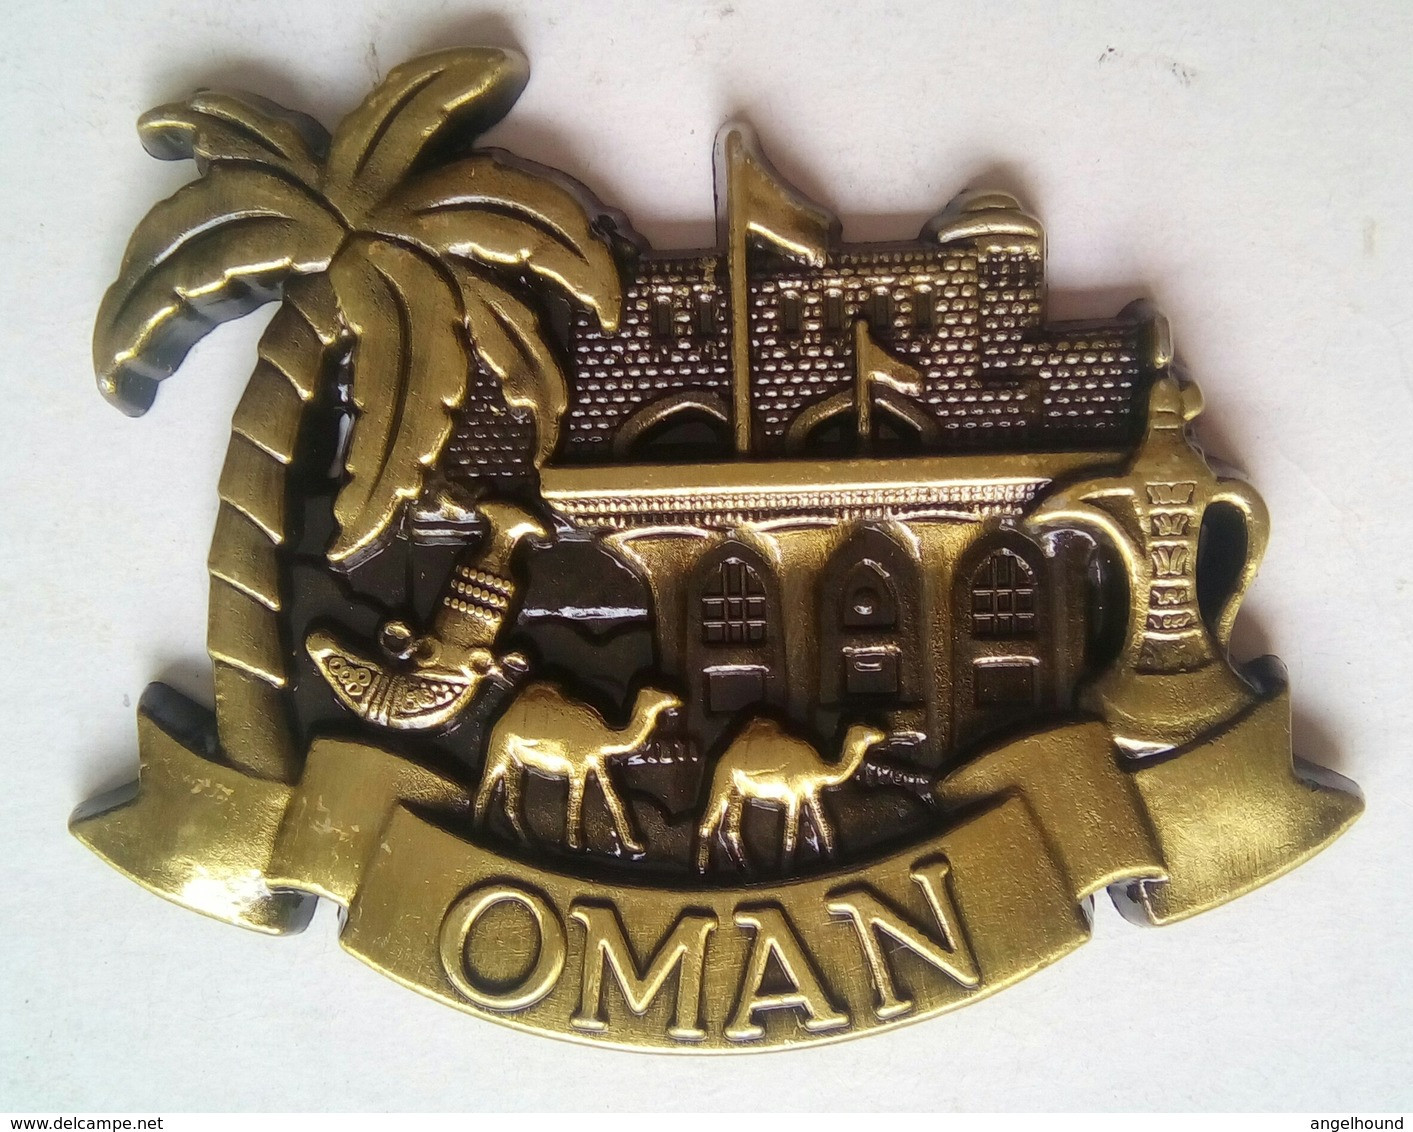 Oman - Tourism